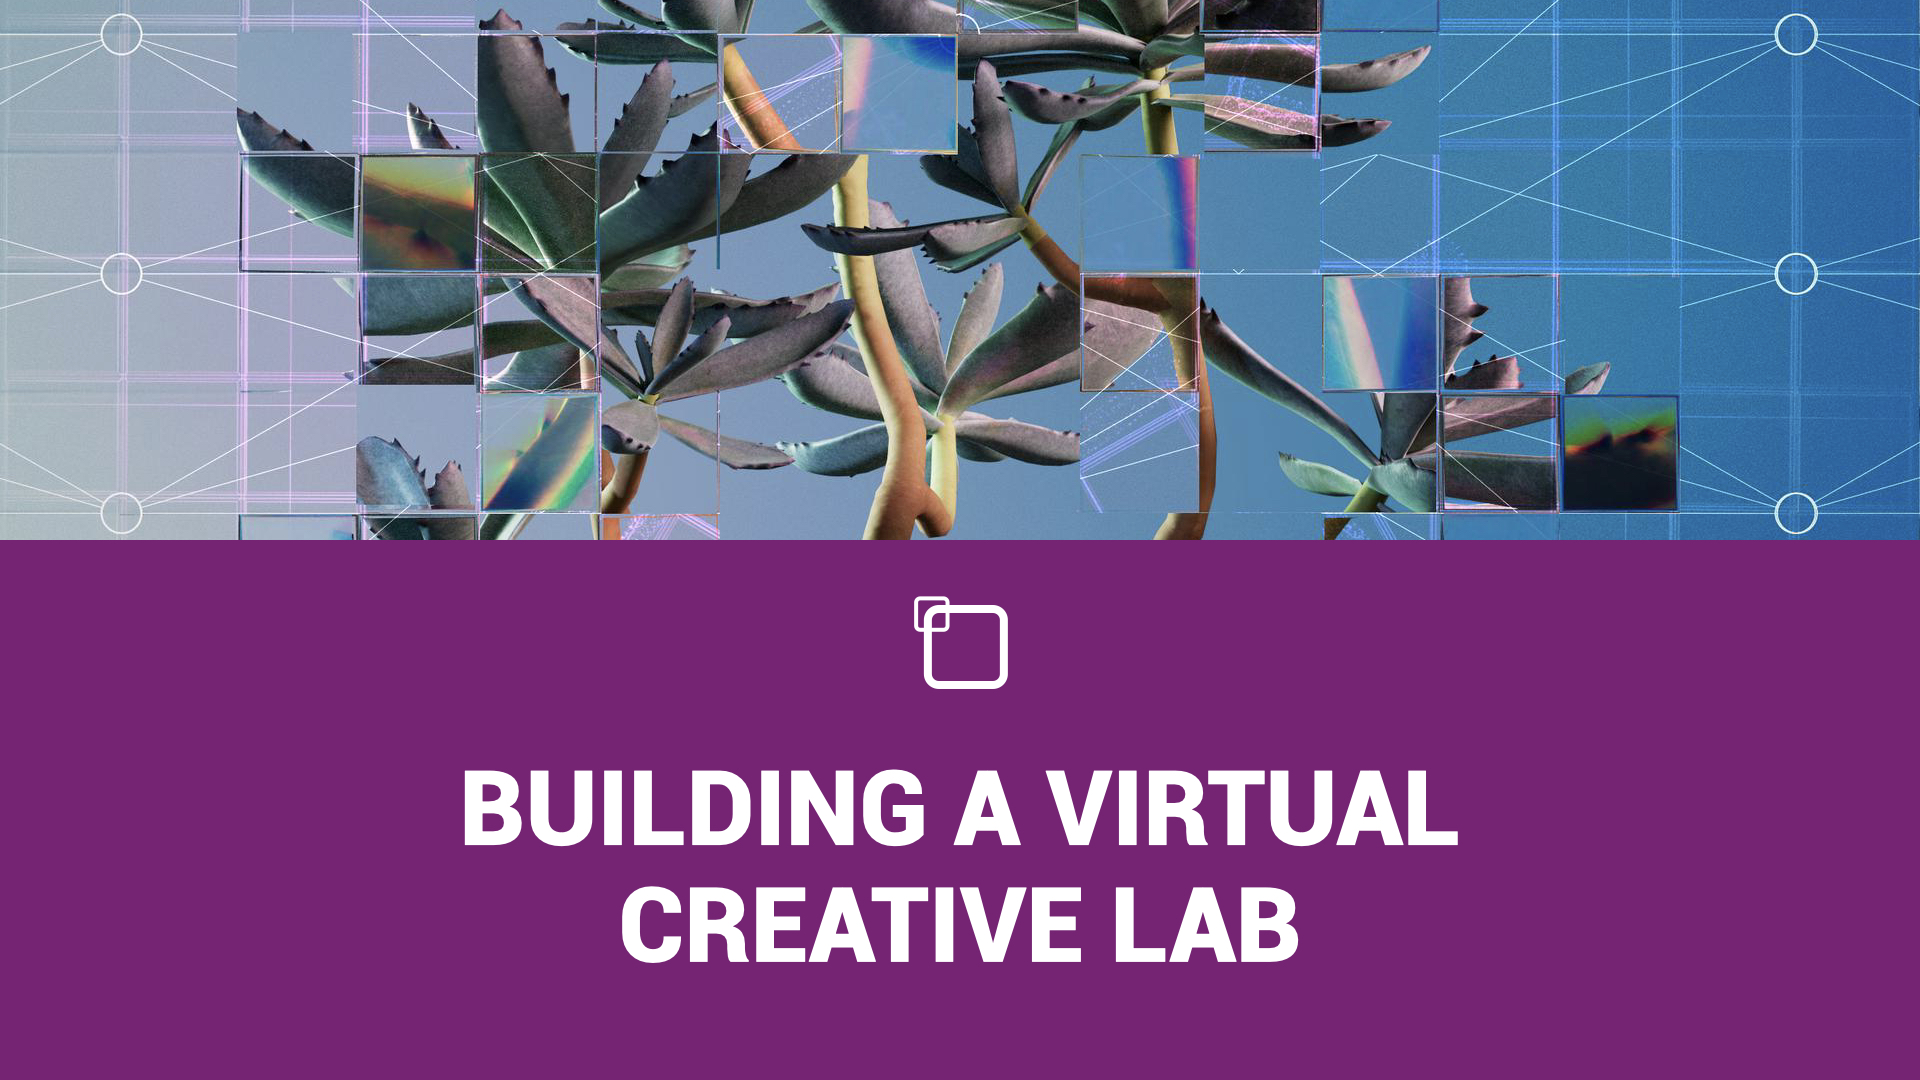 Building a virtual lab